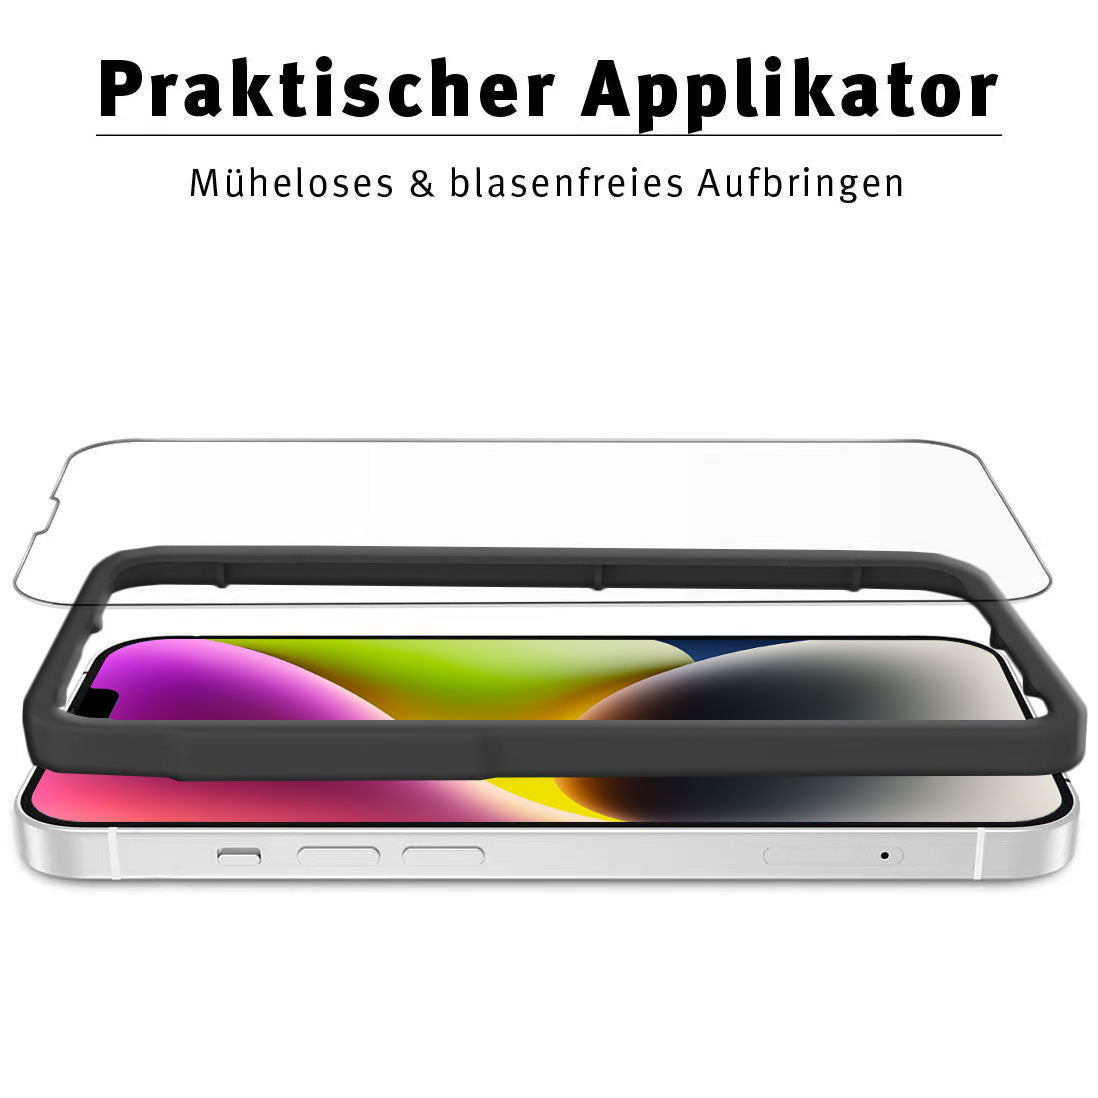 ArktisPRO iPhone 14 Displayschutz GLAS - 3er Set